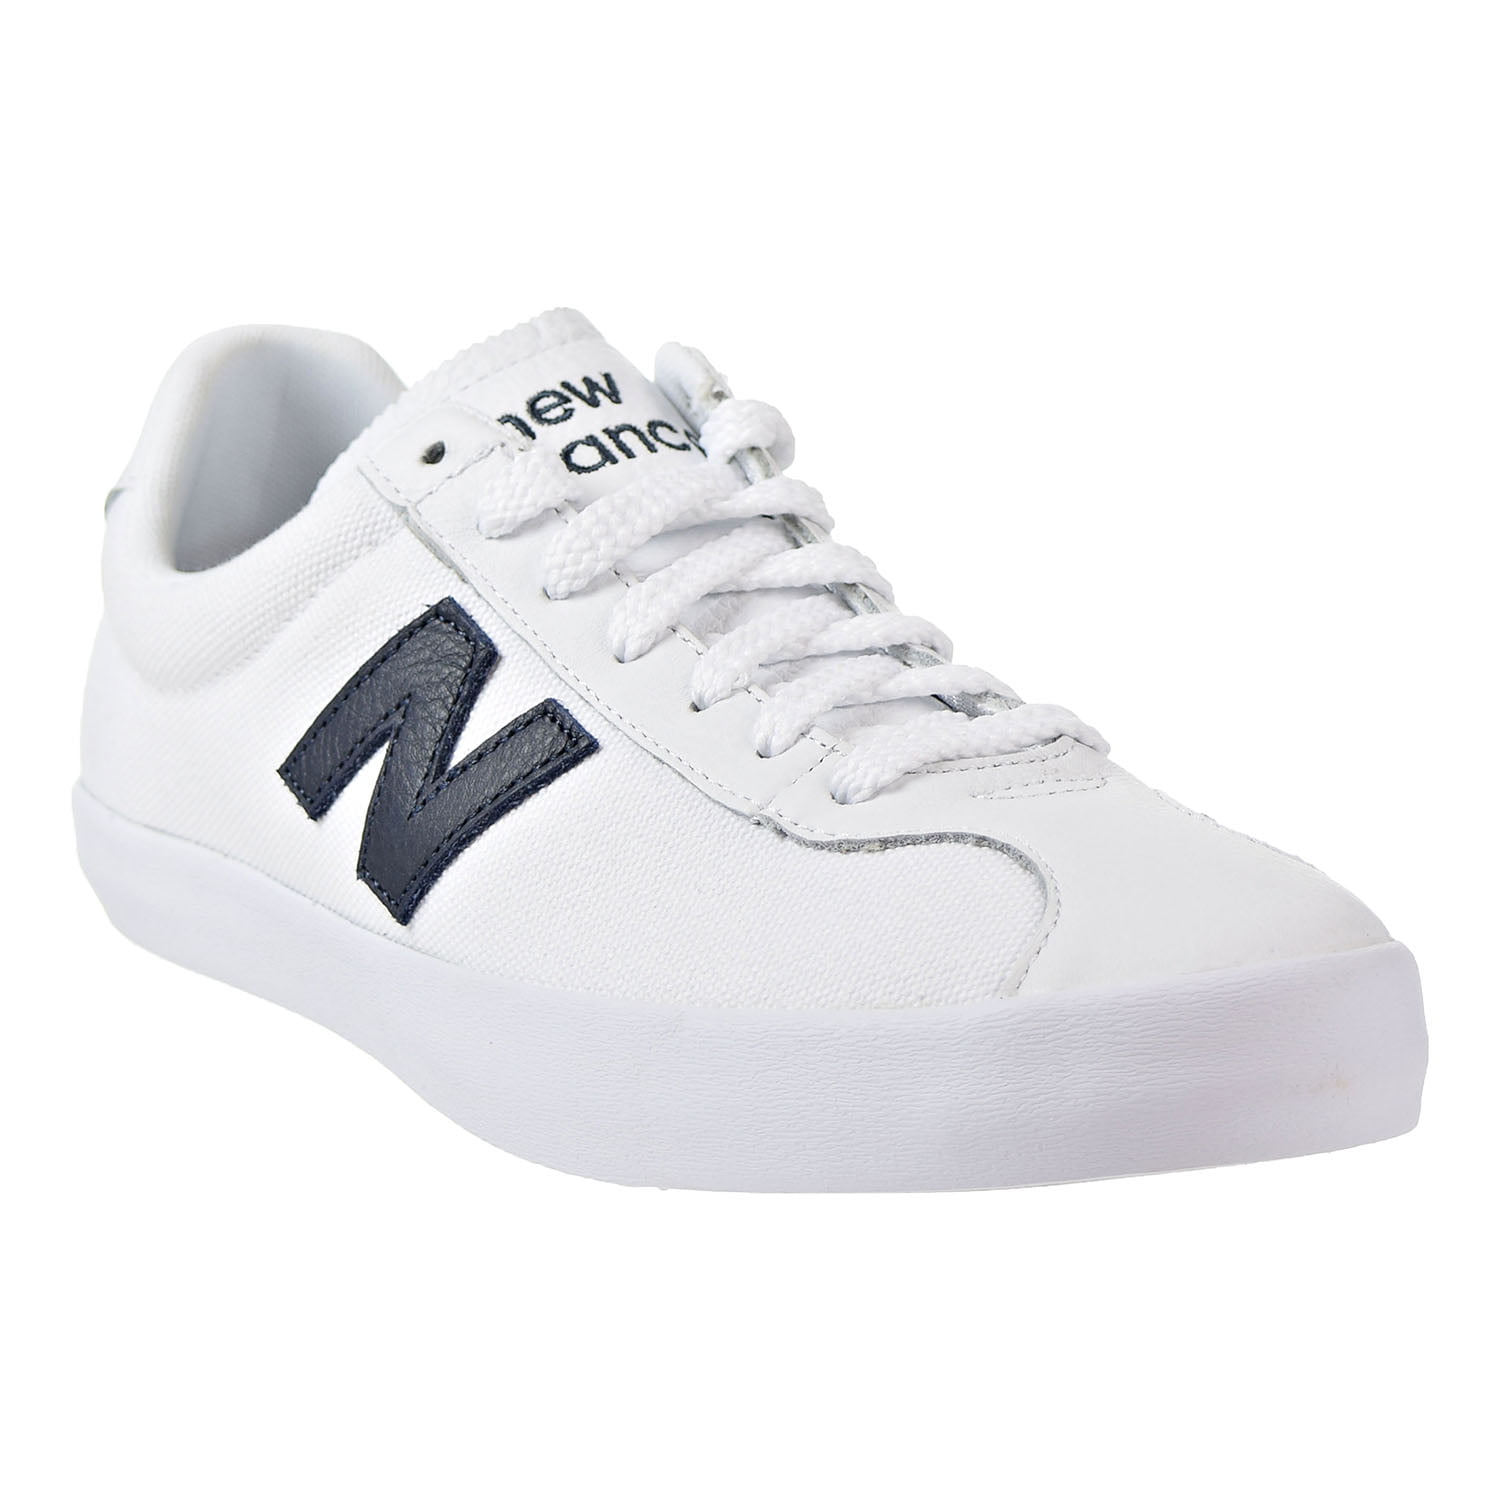 Shoes White/Navy ml22-bn - Walmart 